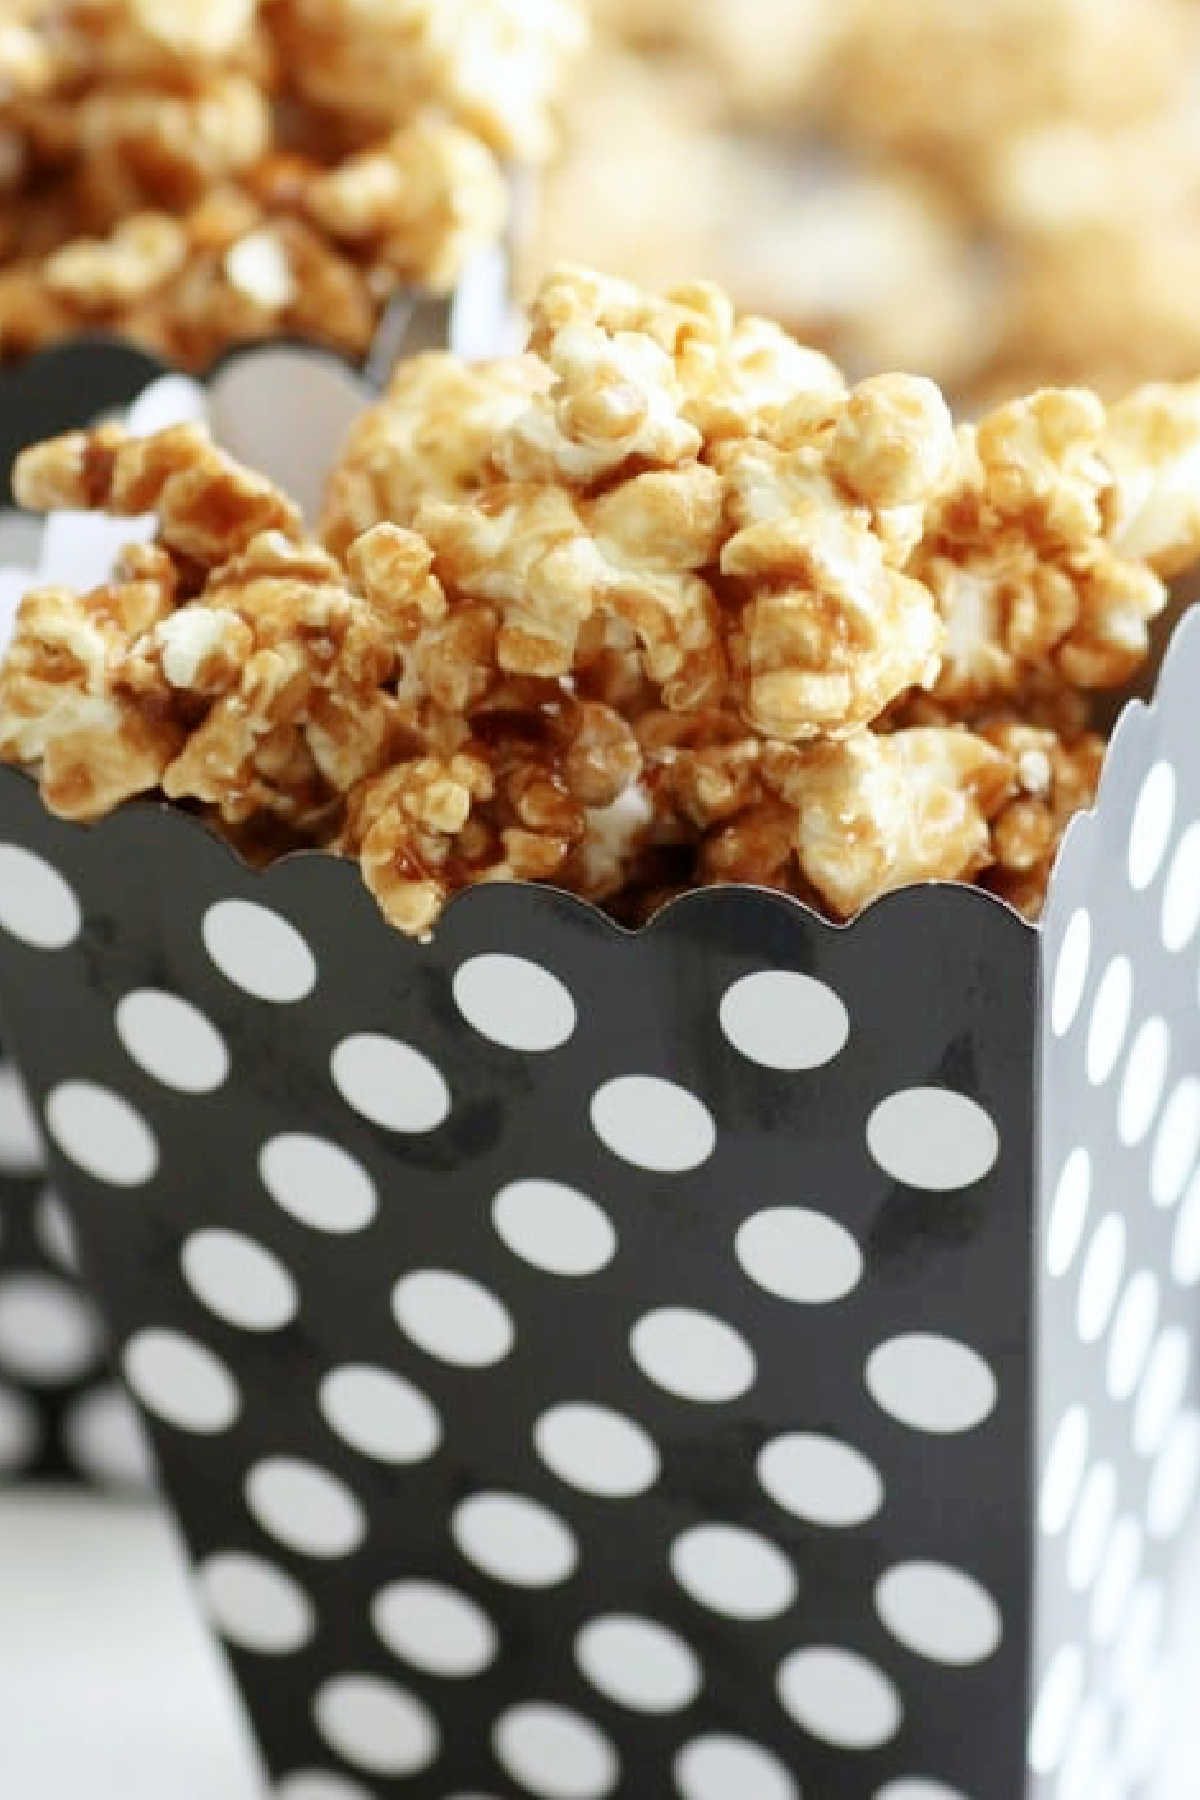 Cheap Party Food Ideas - Microwave Caramel Popcorn